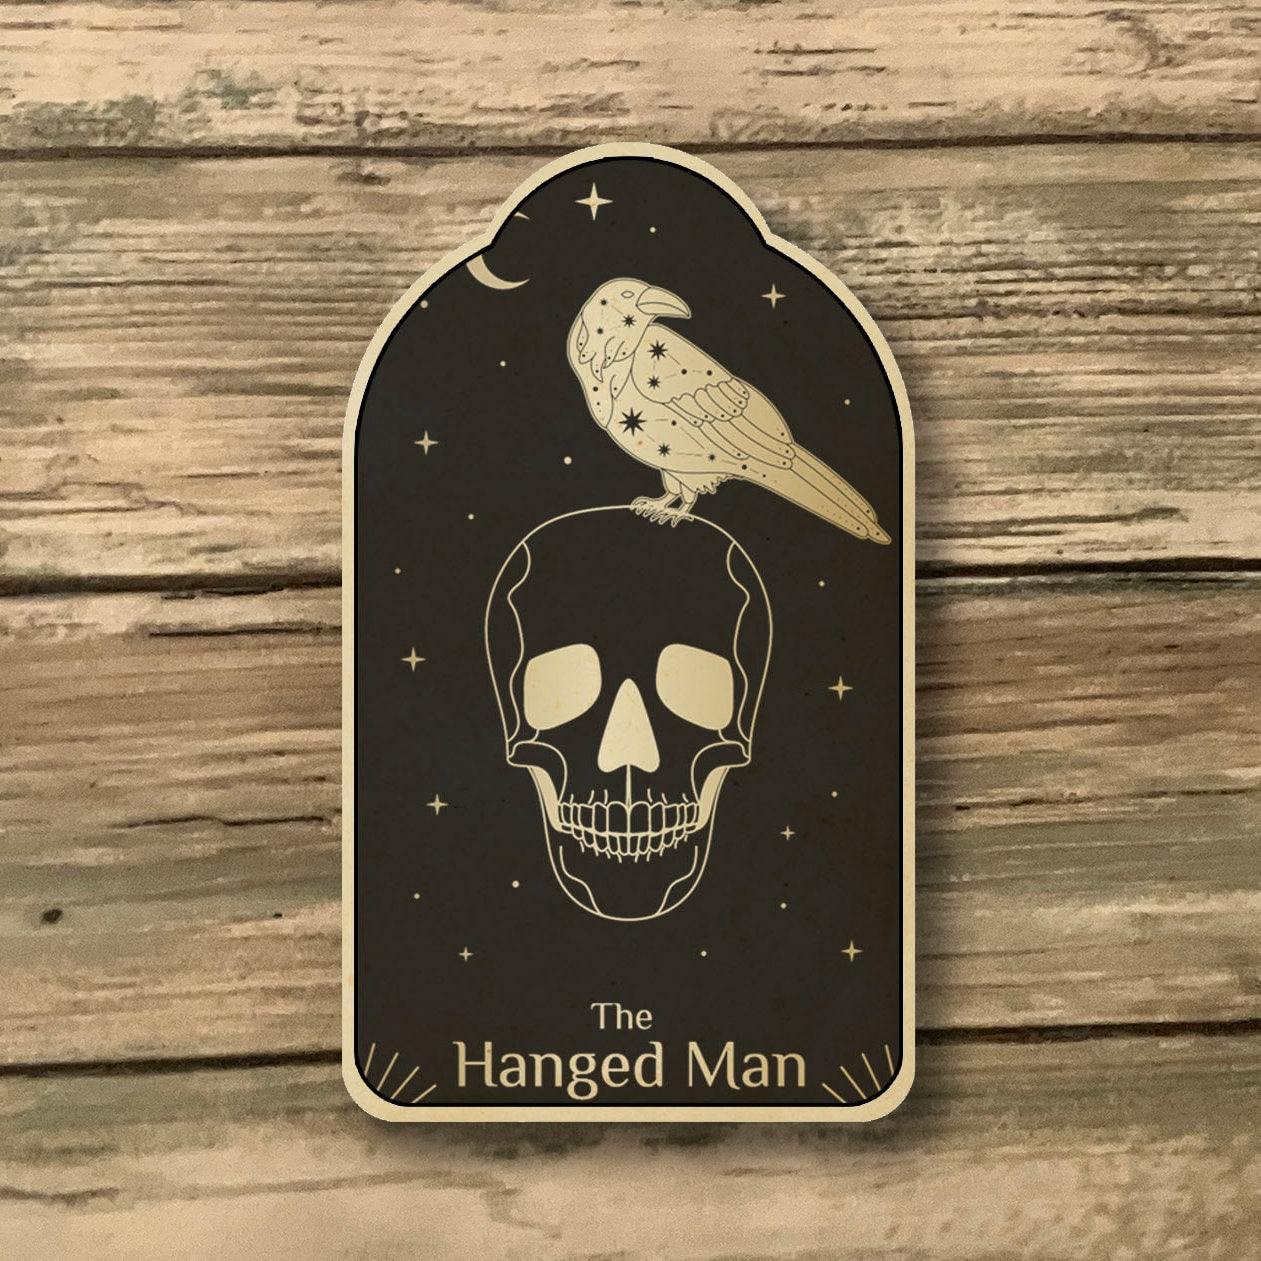 Hanged Man Tarot Card Magnet - UV-Printed 3" Height - Tarot Magnet -  Symbolic Surrender Decor